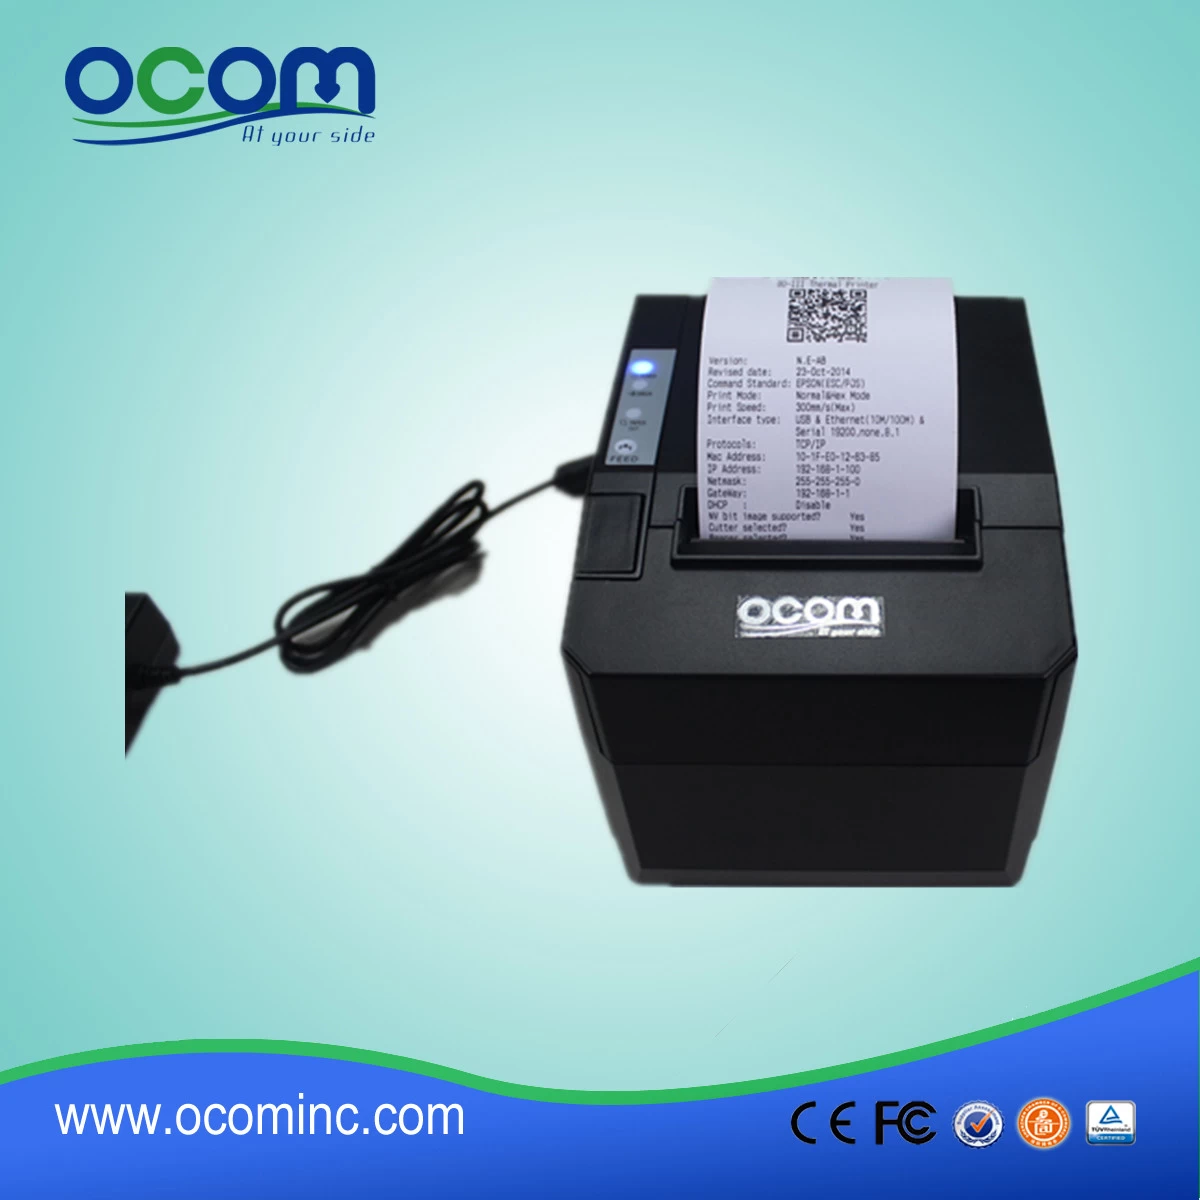 China Thermal 80mm POS Printer Price OCPP-88A-URL